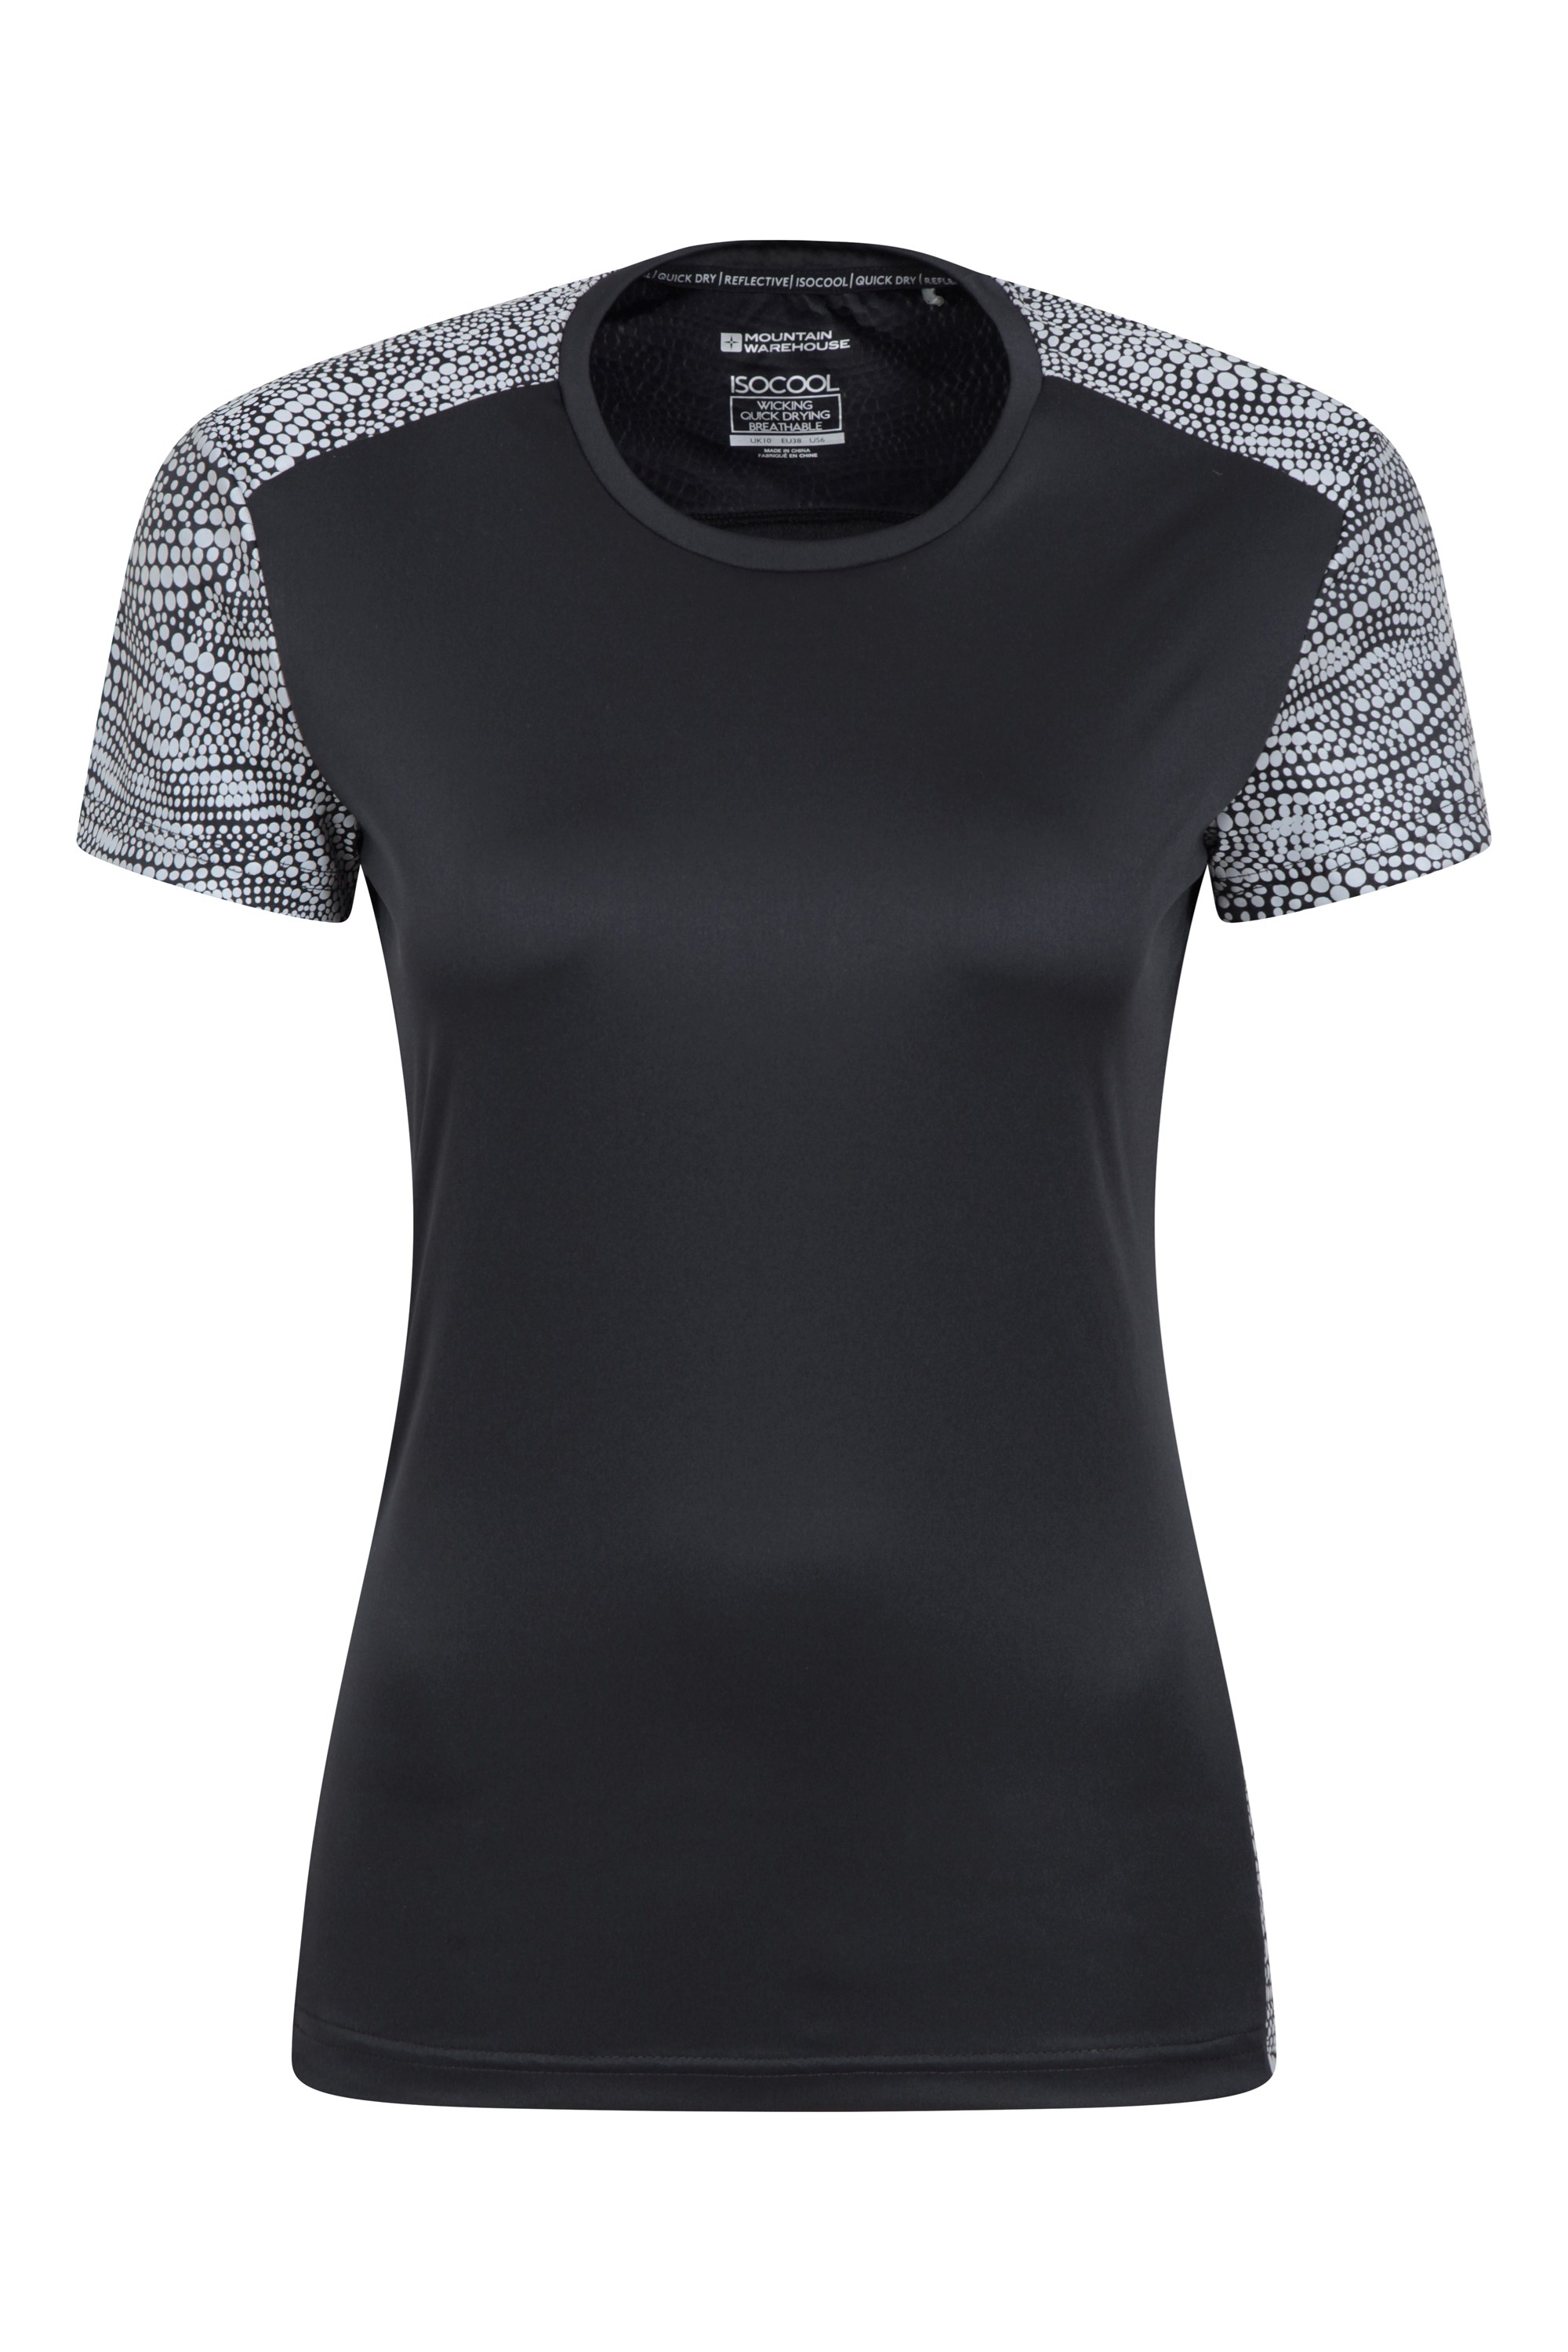 Pro Running Reflective Womens T-shirt - Black